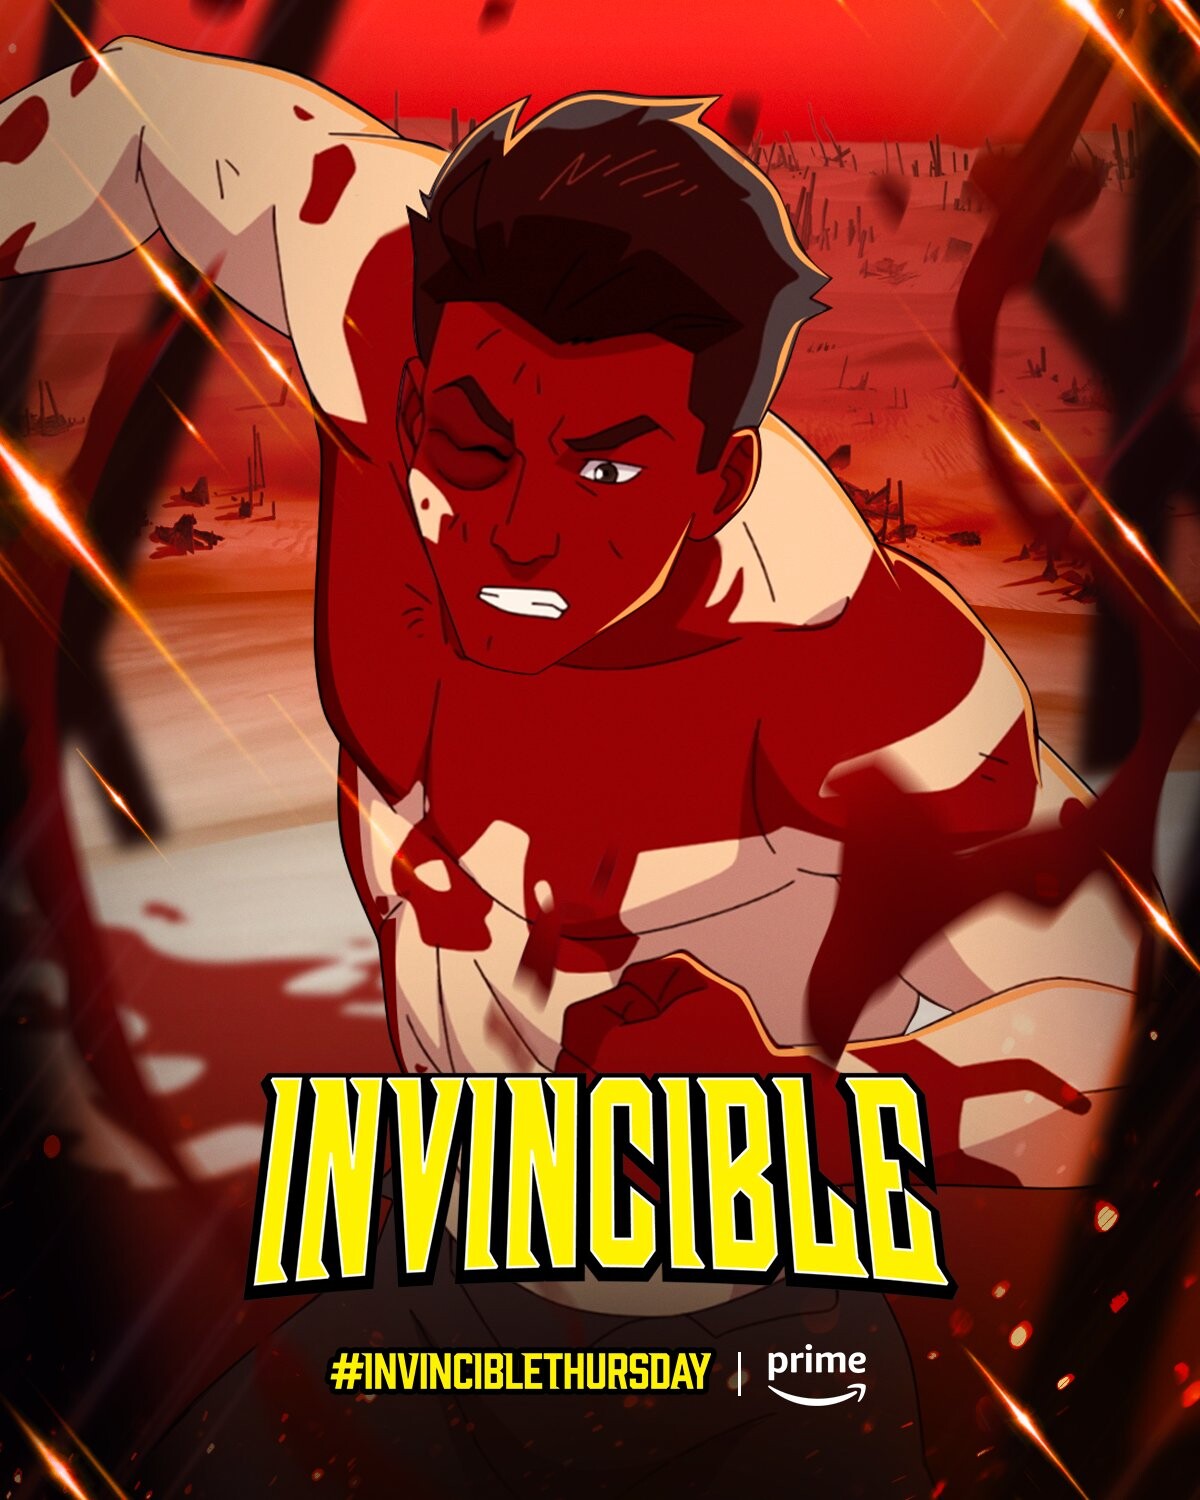 Invincible: Season 2